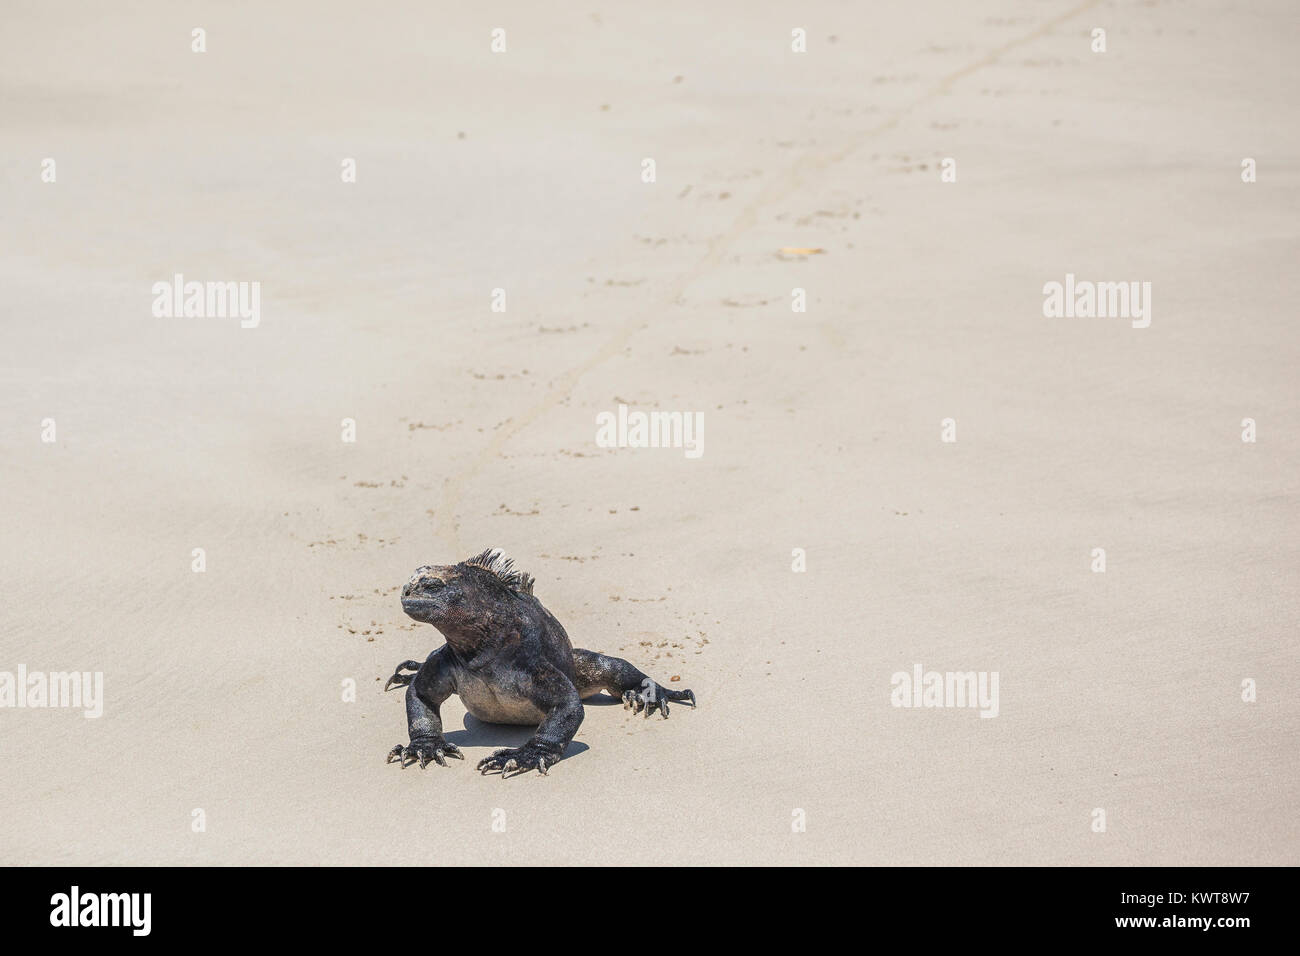 A single Galapagos marine iguana (Amblyrhynchus cristatus albemarlensis) walks along a sandy beach, leaving its tracks. Stock Photo